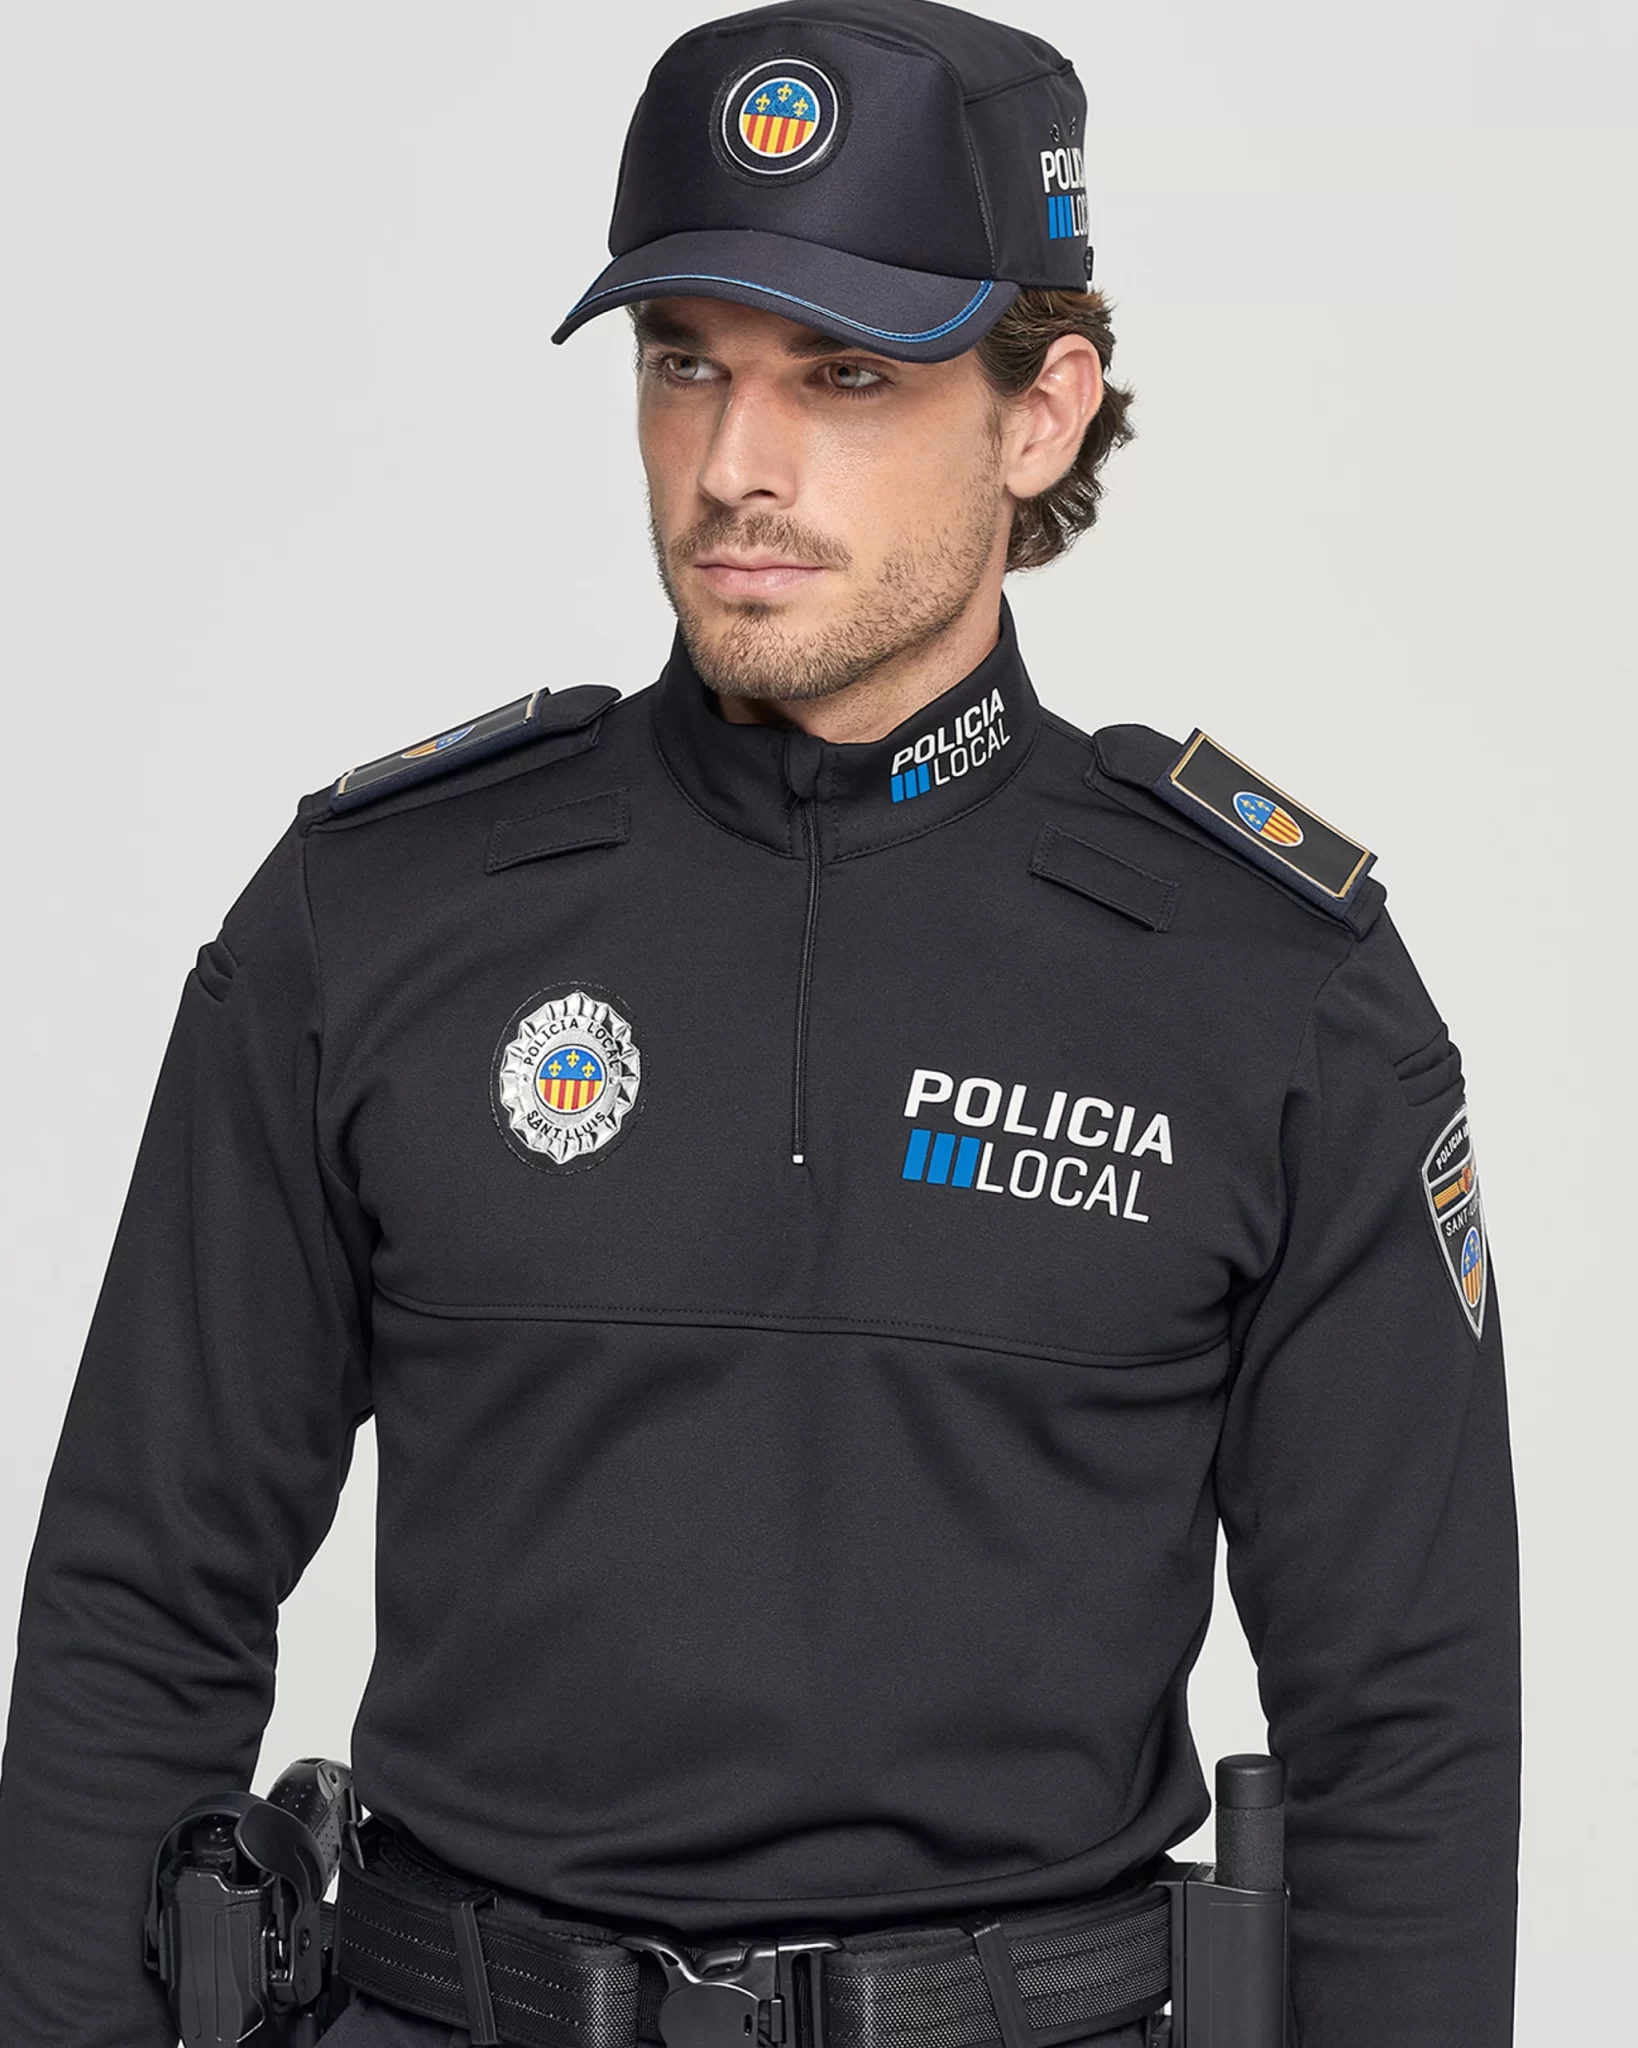 uniformes policía local de Baleares jersey térmico